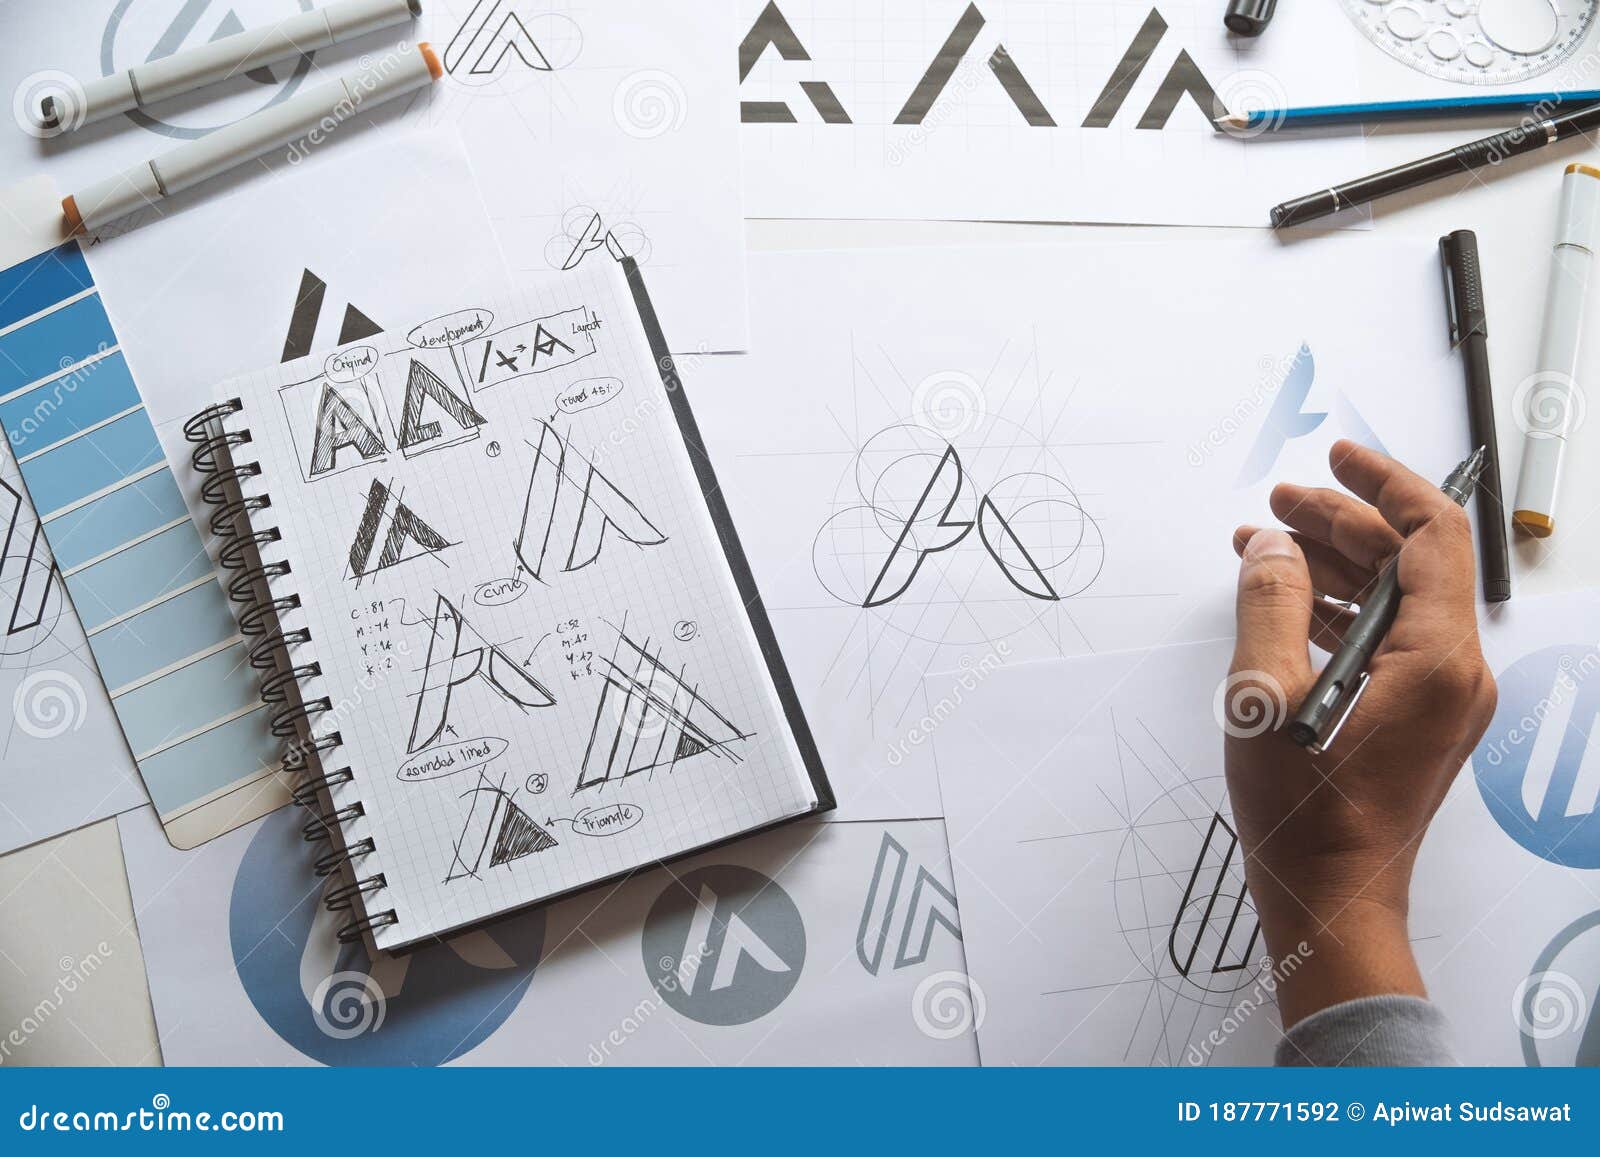 How to Make a Logo in Photoshop in 5 Straightforward Steps | Skillshare Blog